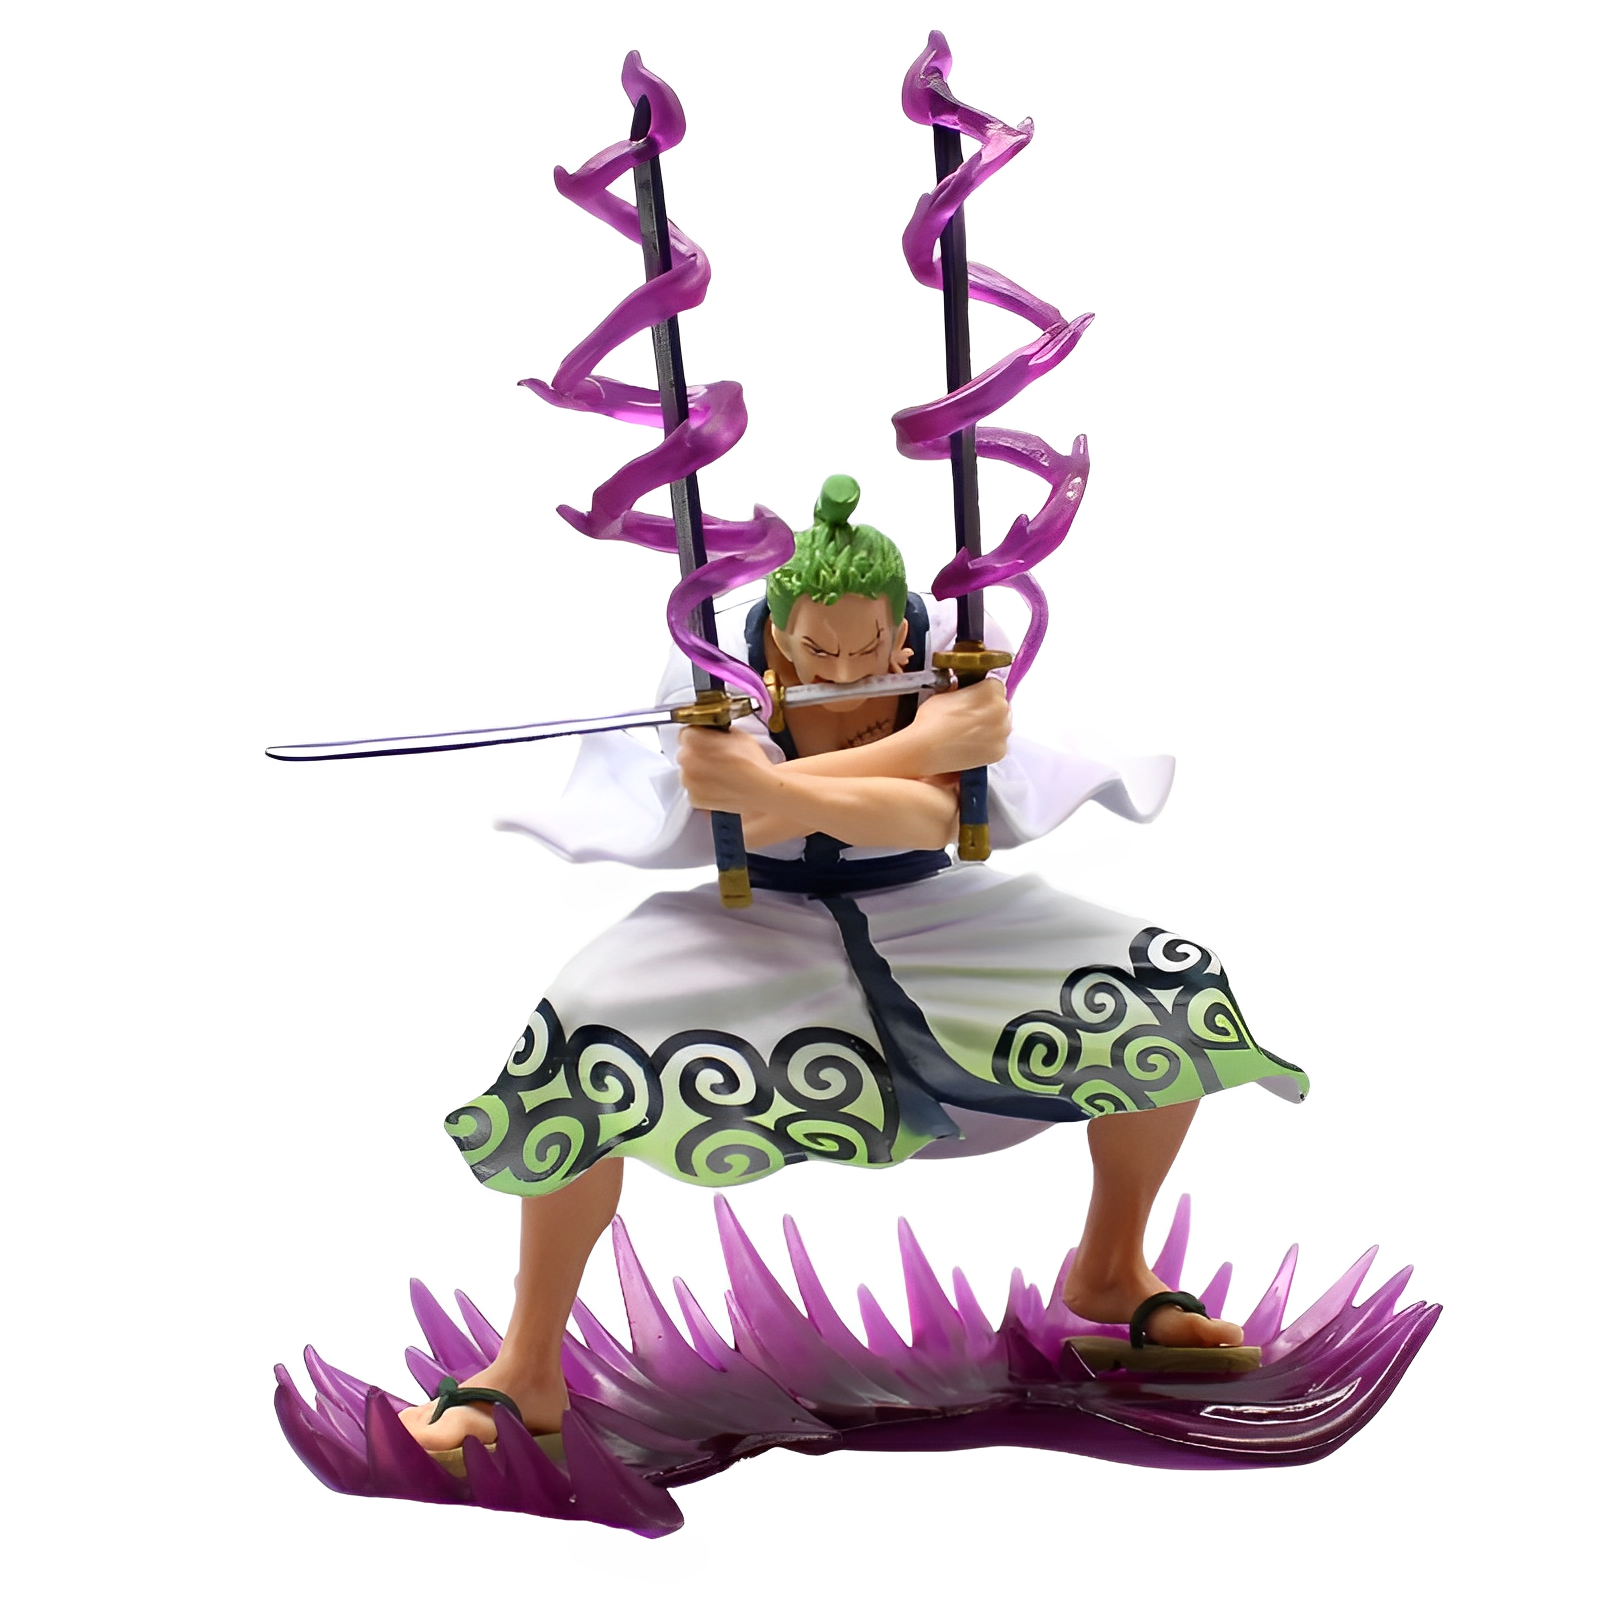 Zoro holding sword PNG Image